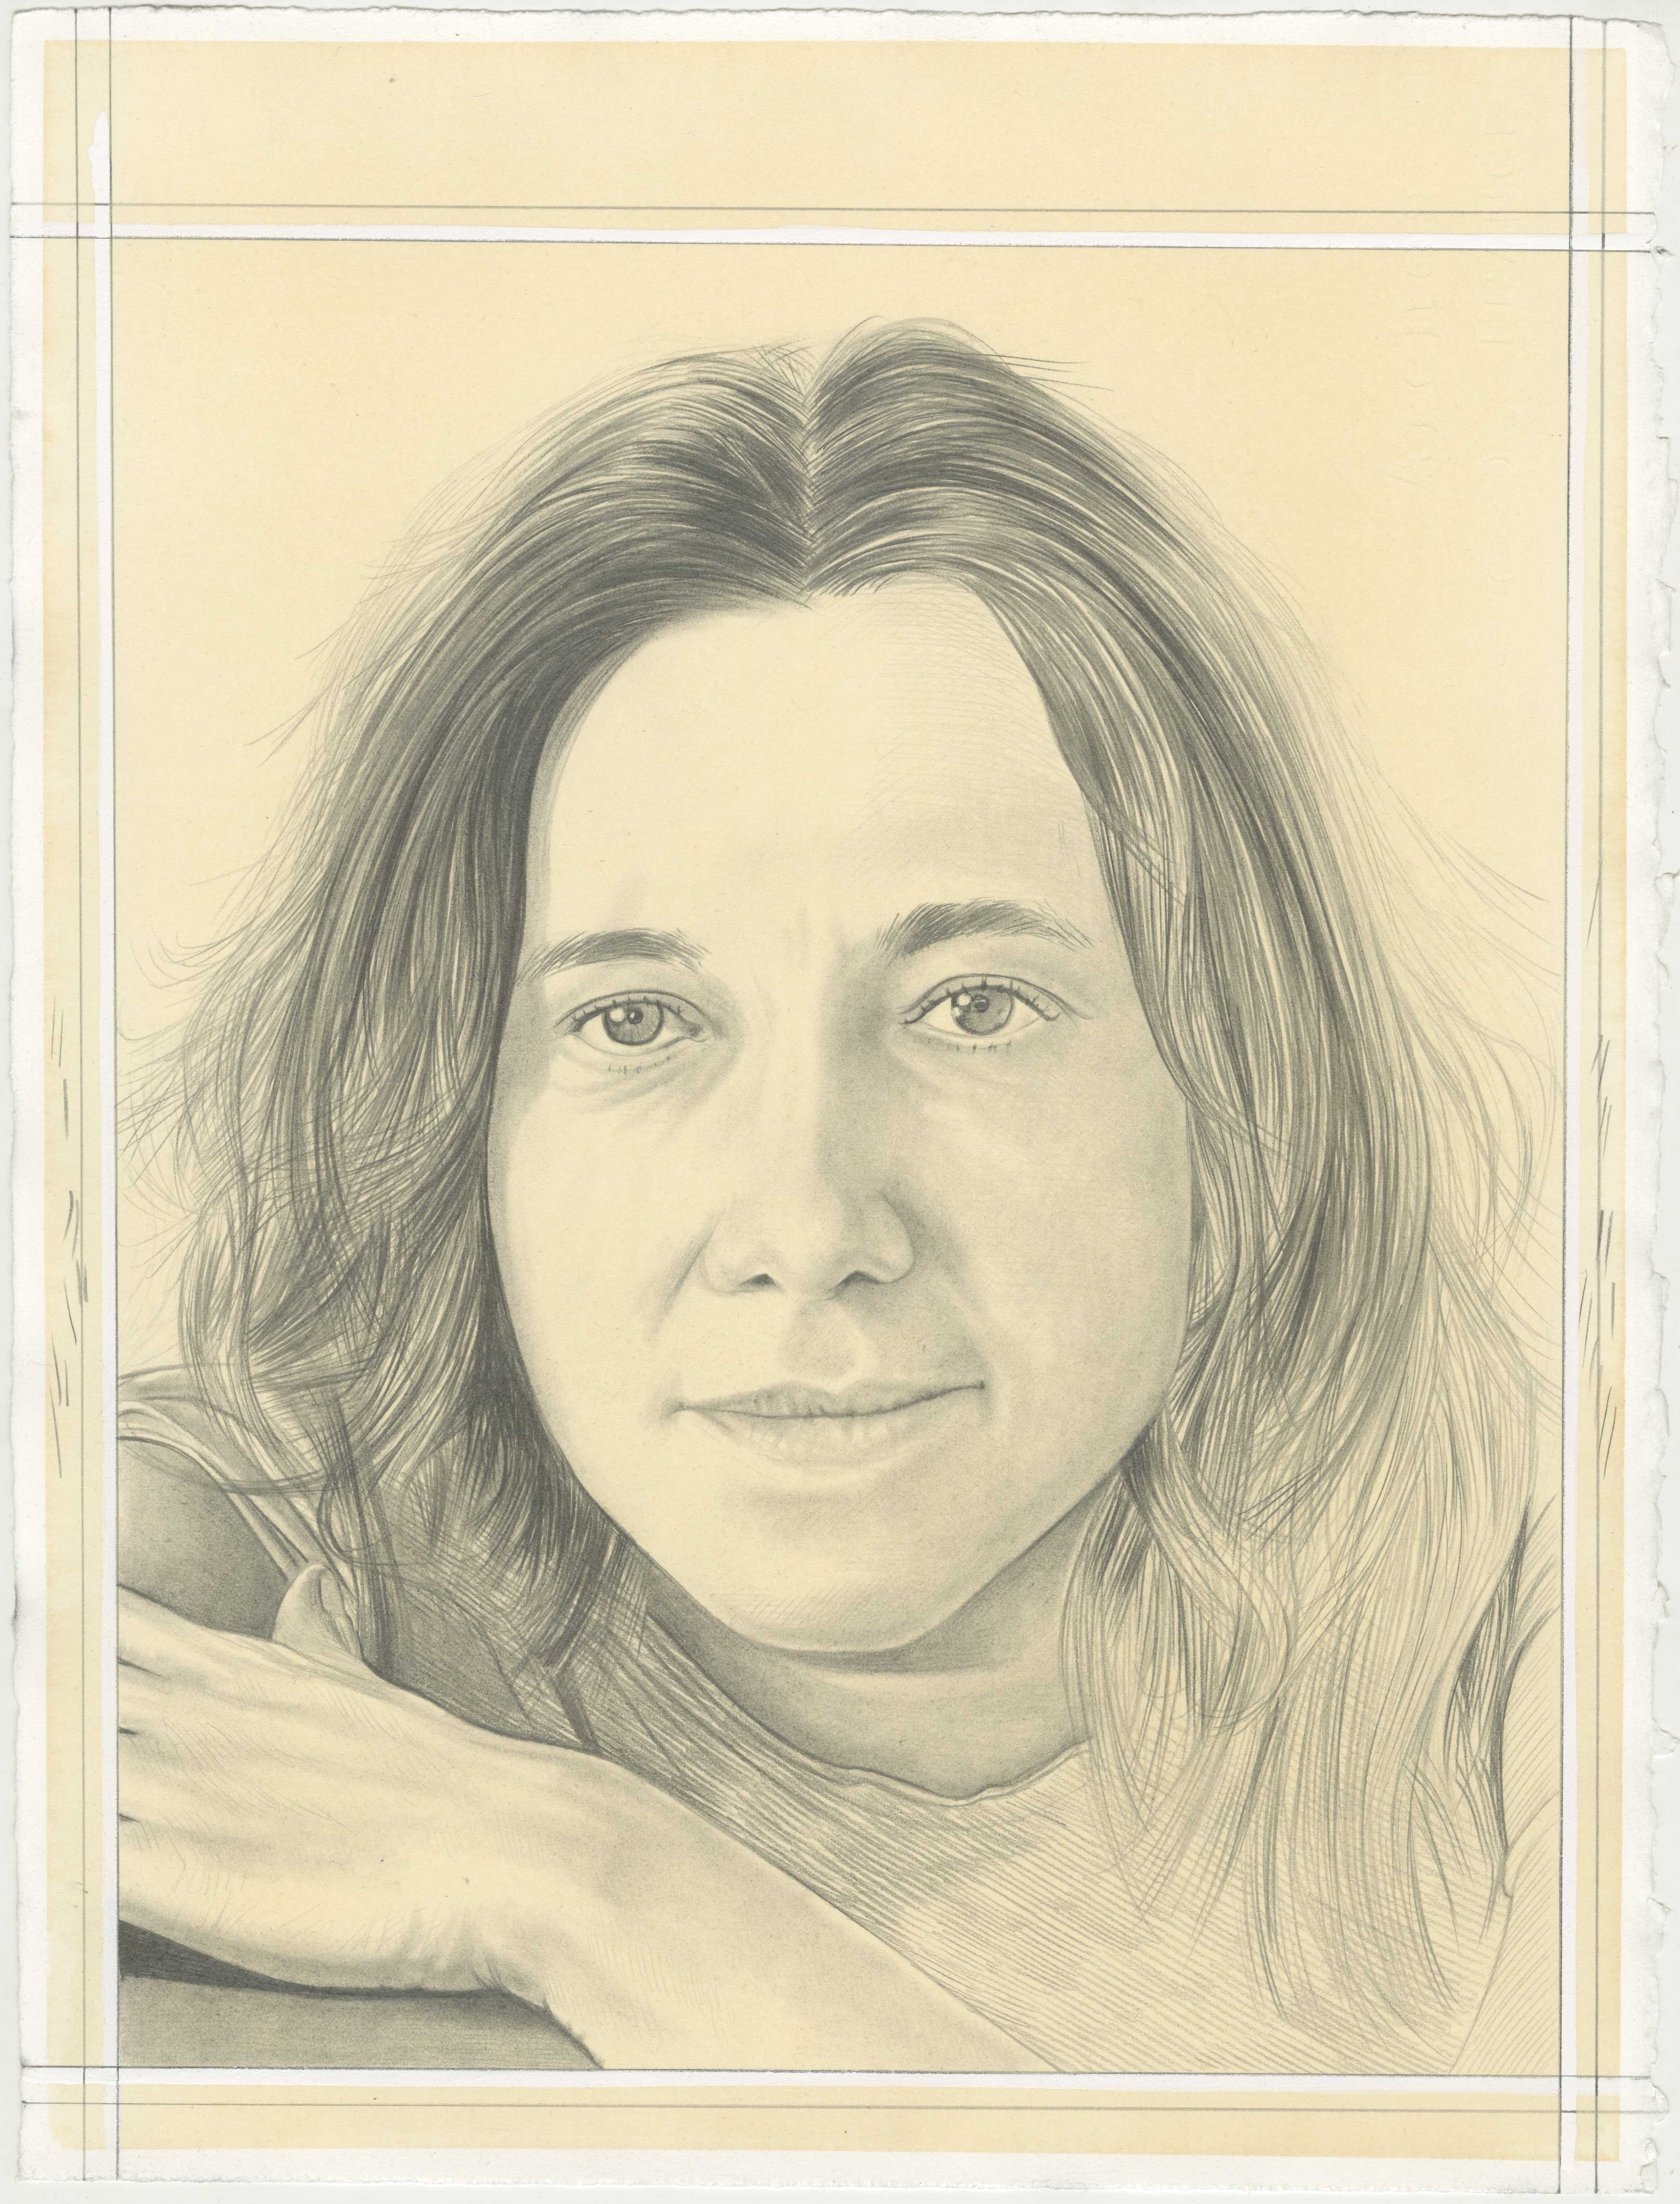 ArtStation - Adriana Lima portrait drawing